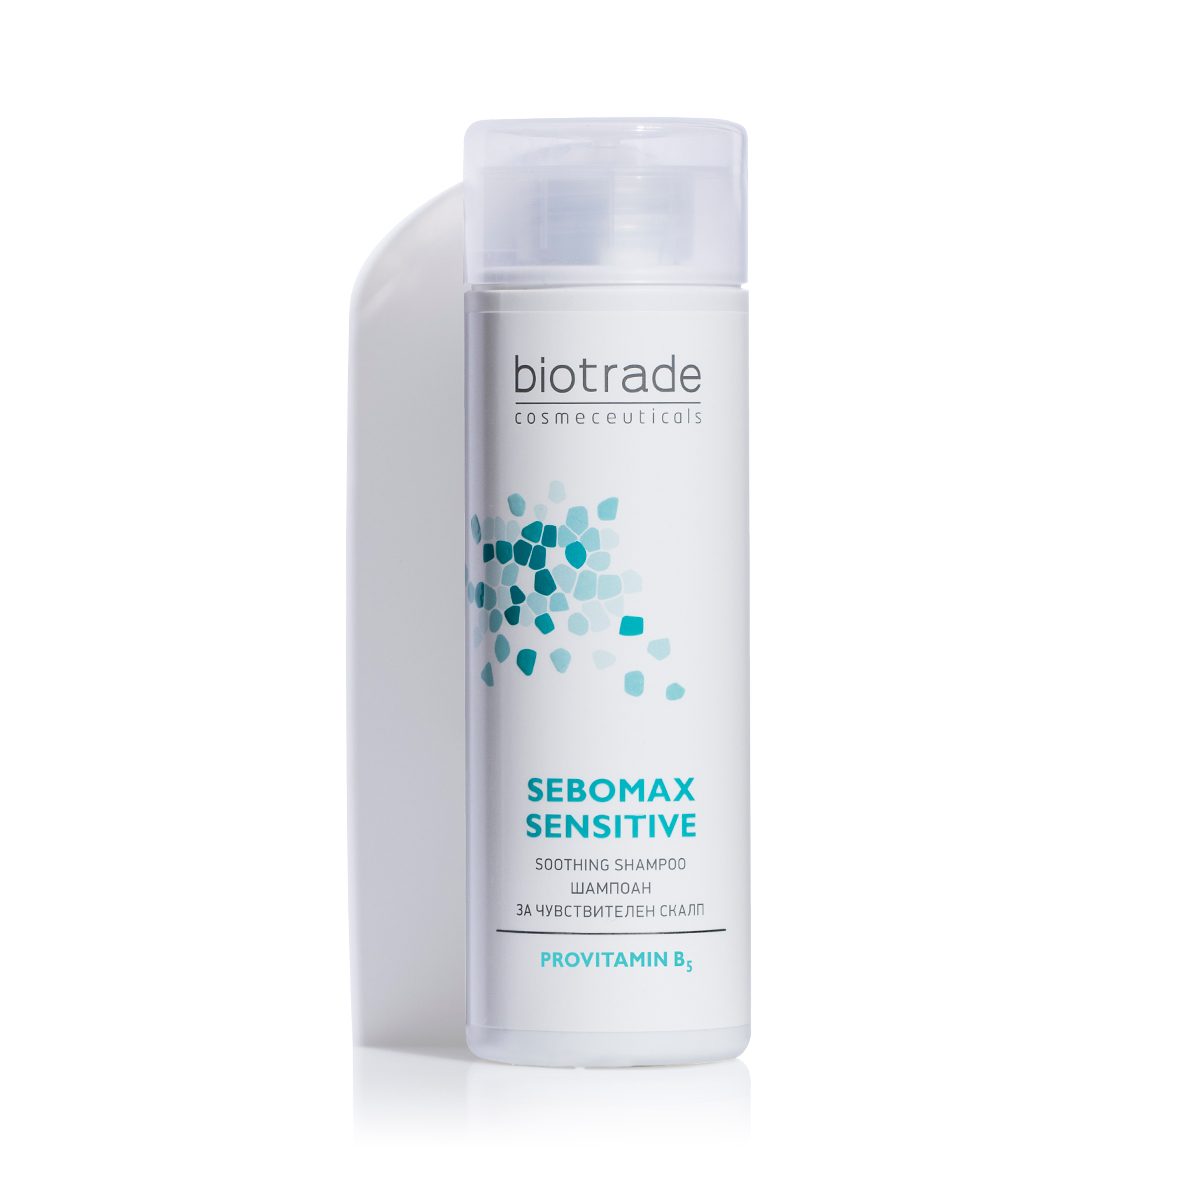 Ingrijire par - Sampon pentru scalp sensibil Sebomax Sensitive, 200 ml, Biotrade
, nordpharm.ro